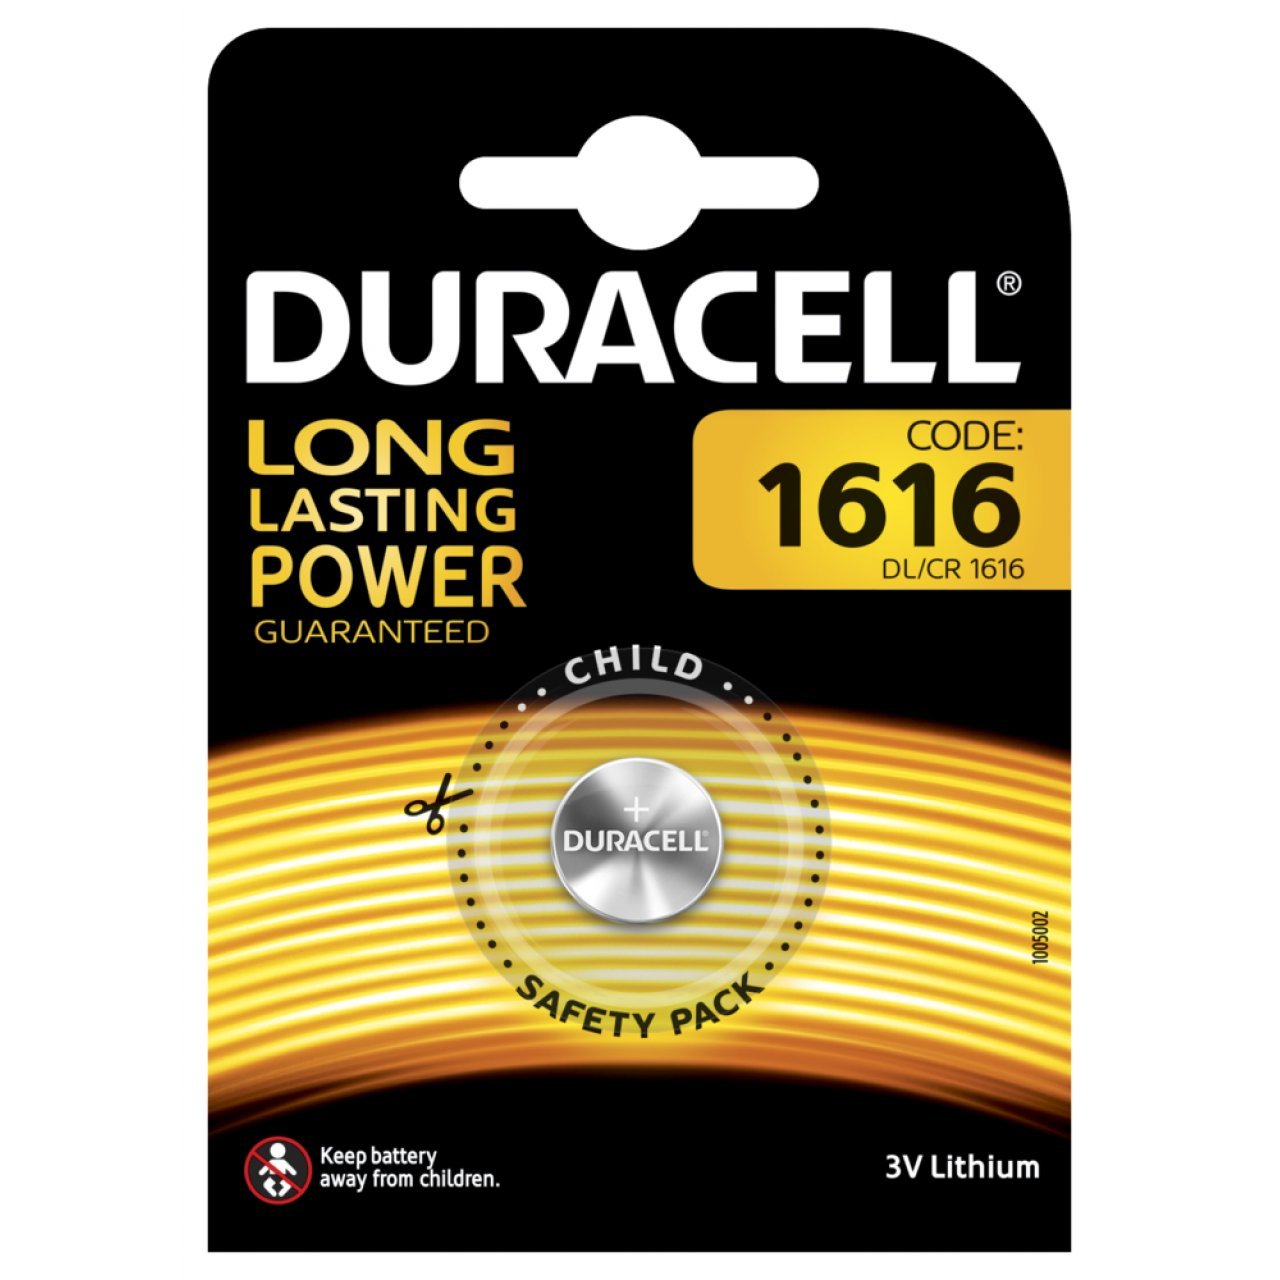 Pack Von 1 Rechts 10 Batterie CR-1616/DL-1616 Duracell Knopf Lithium 3V Dlc 